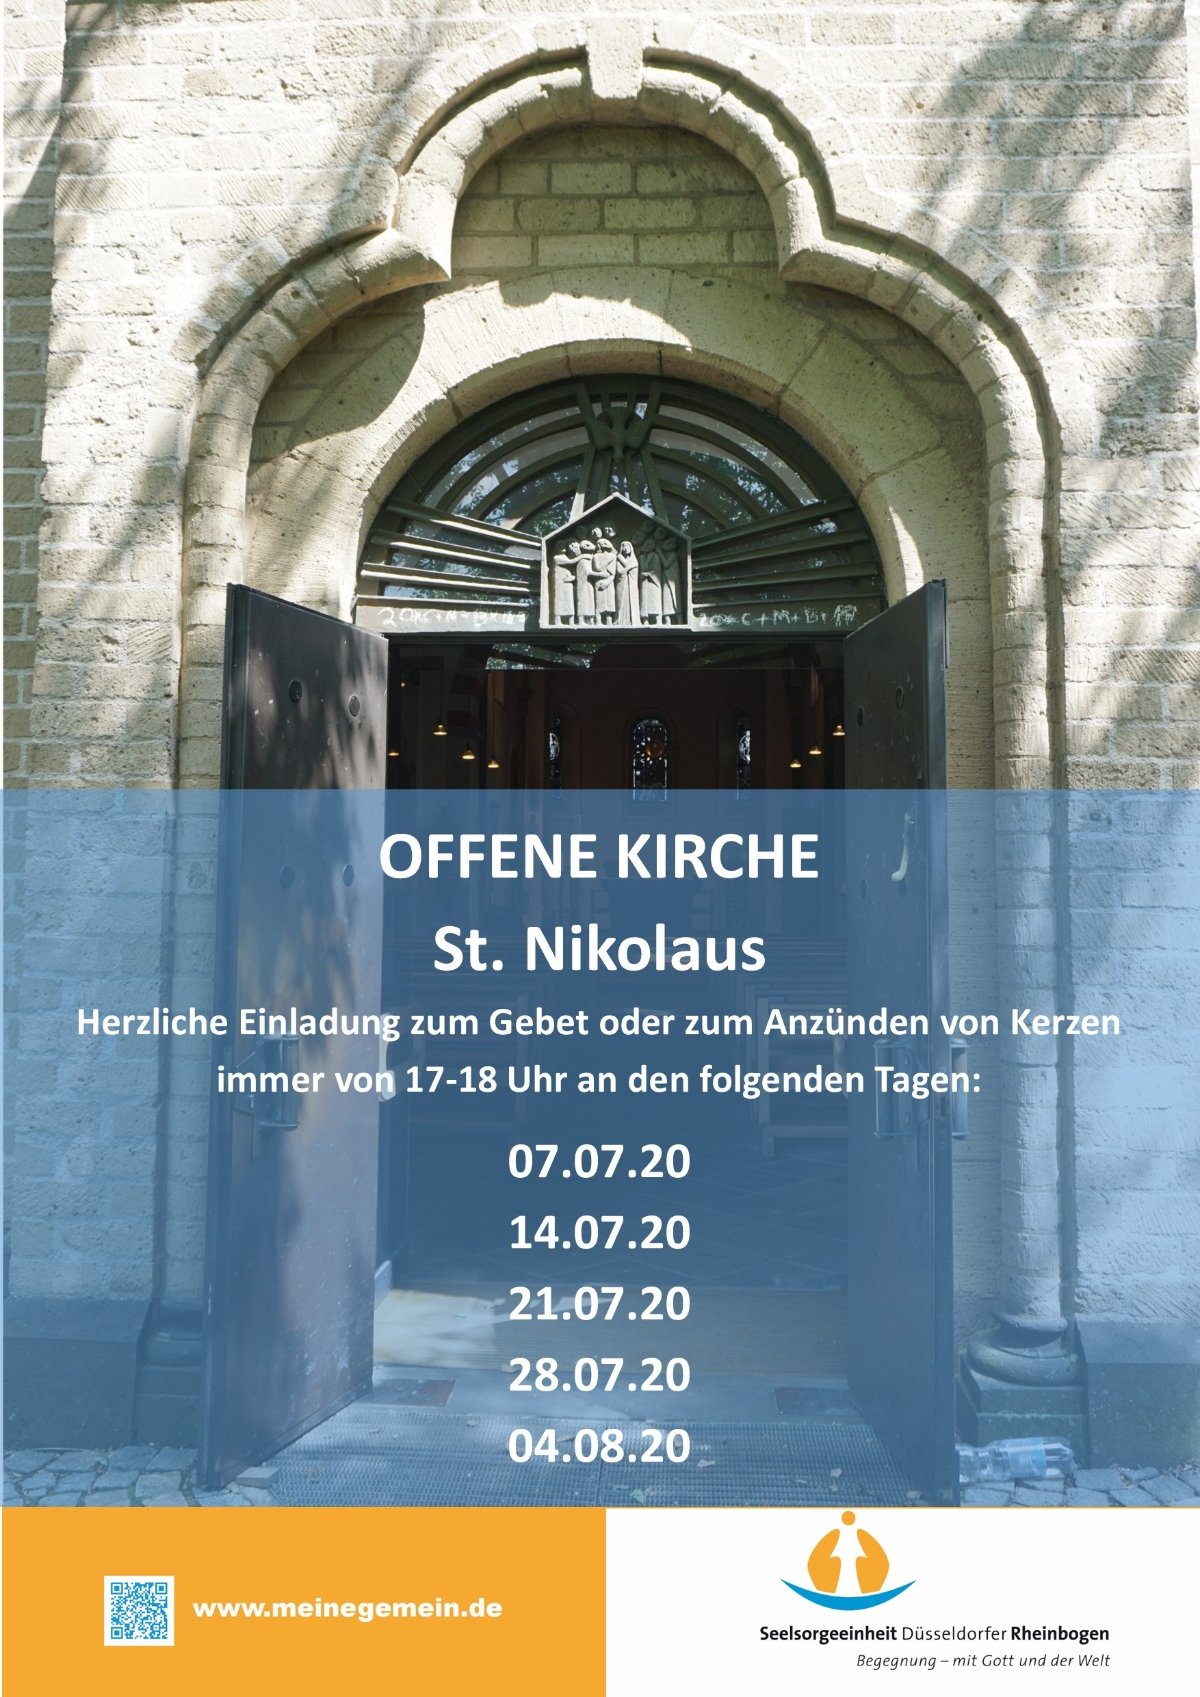 Offene Kirche St. Nikolaus 2020 (c) SE Düsseldorfer Rheinbogen